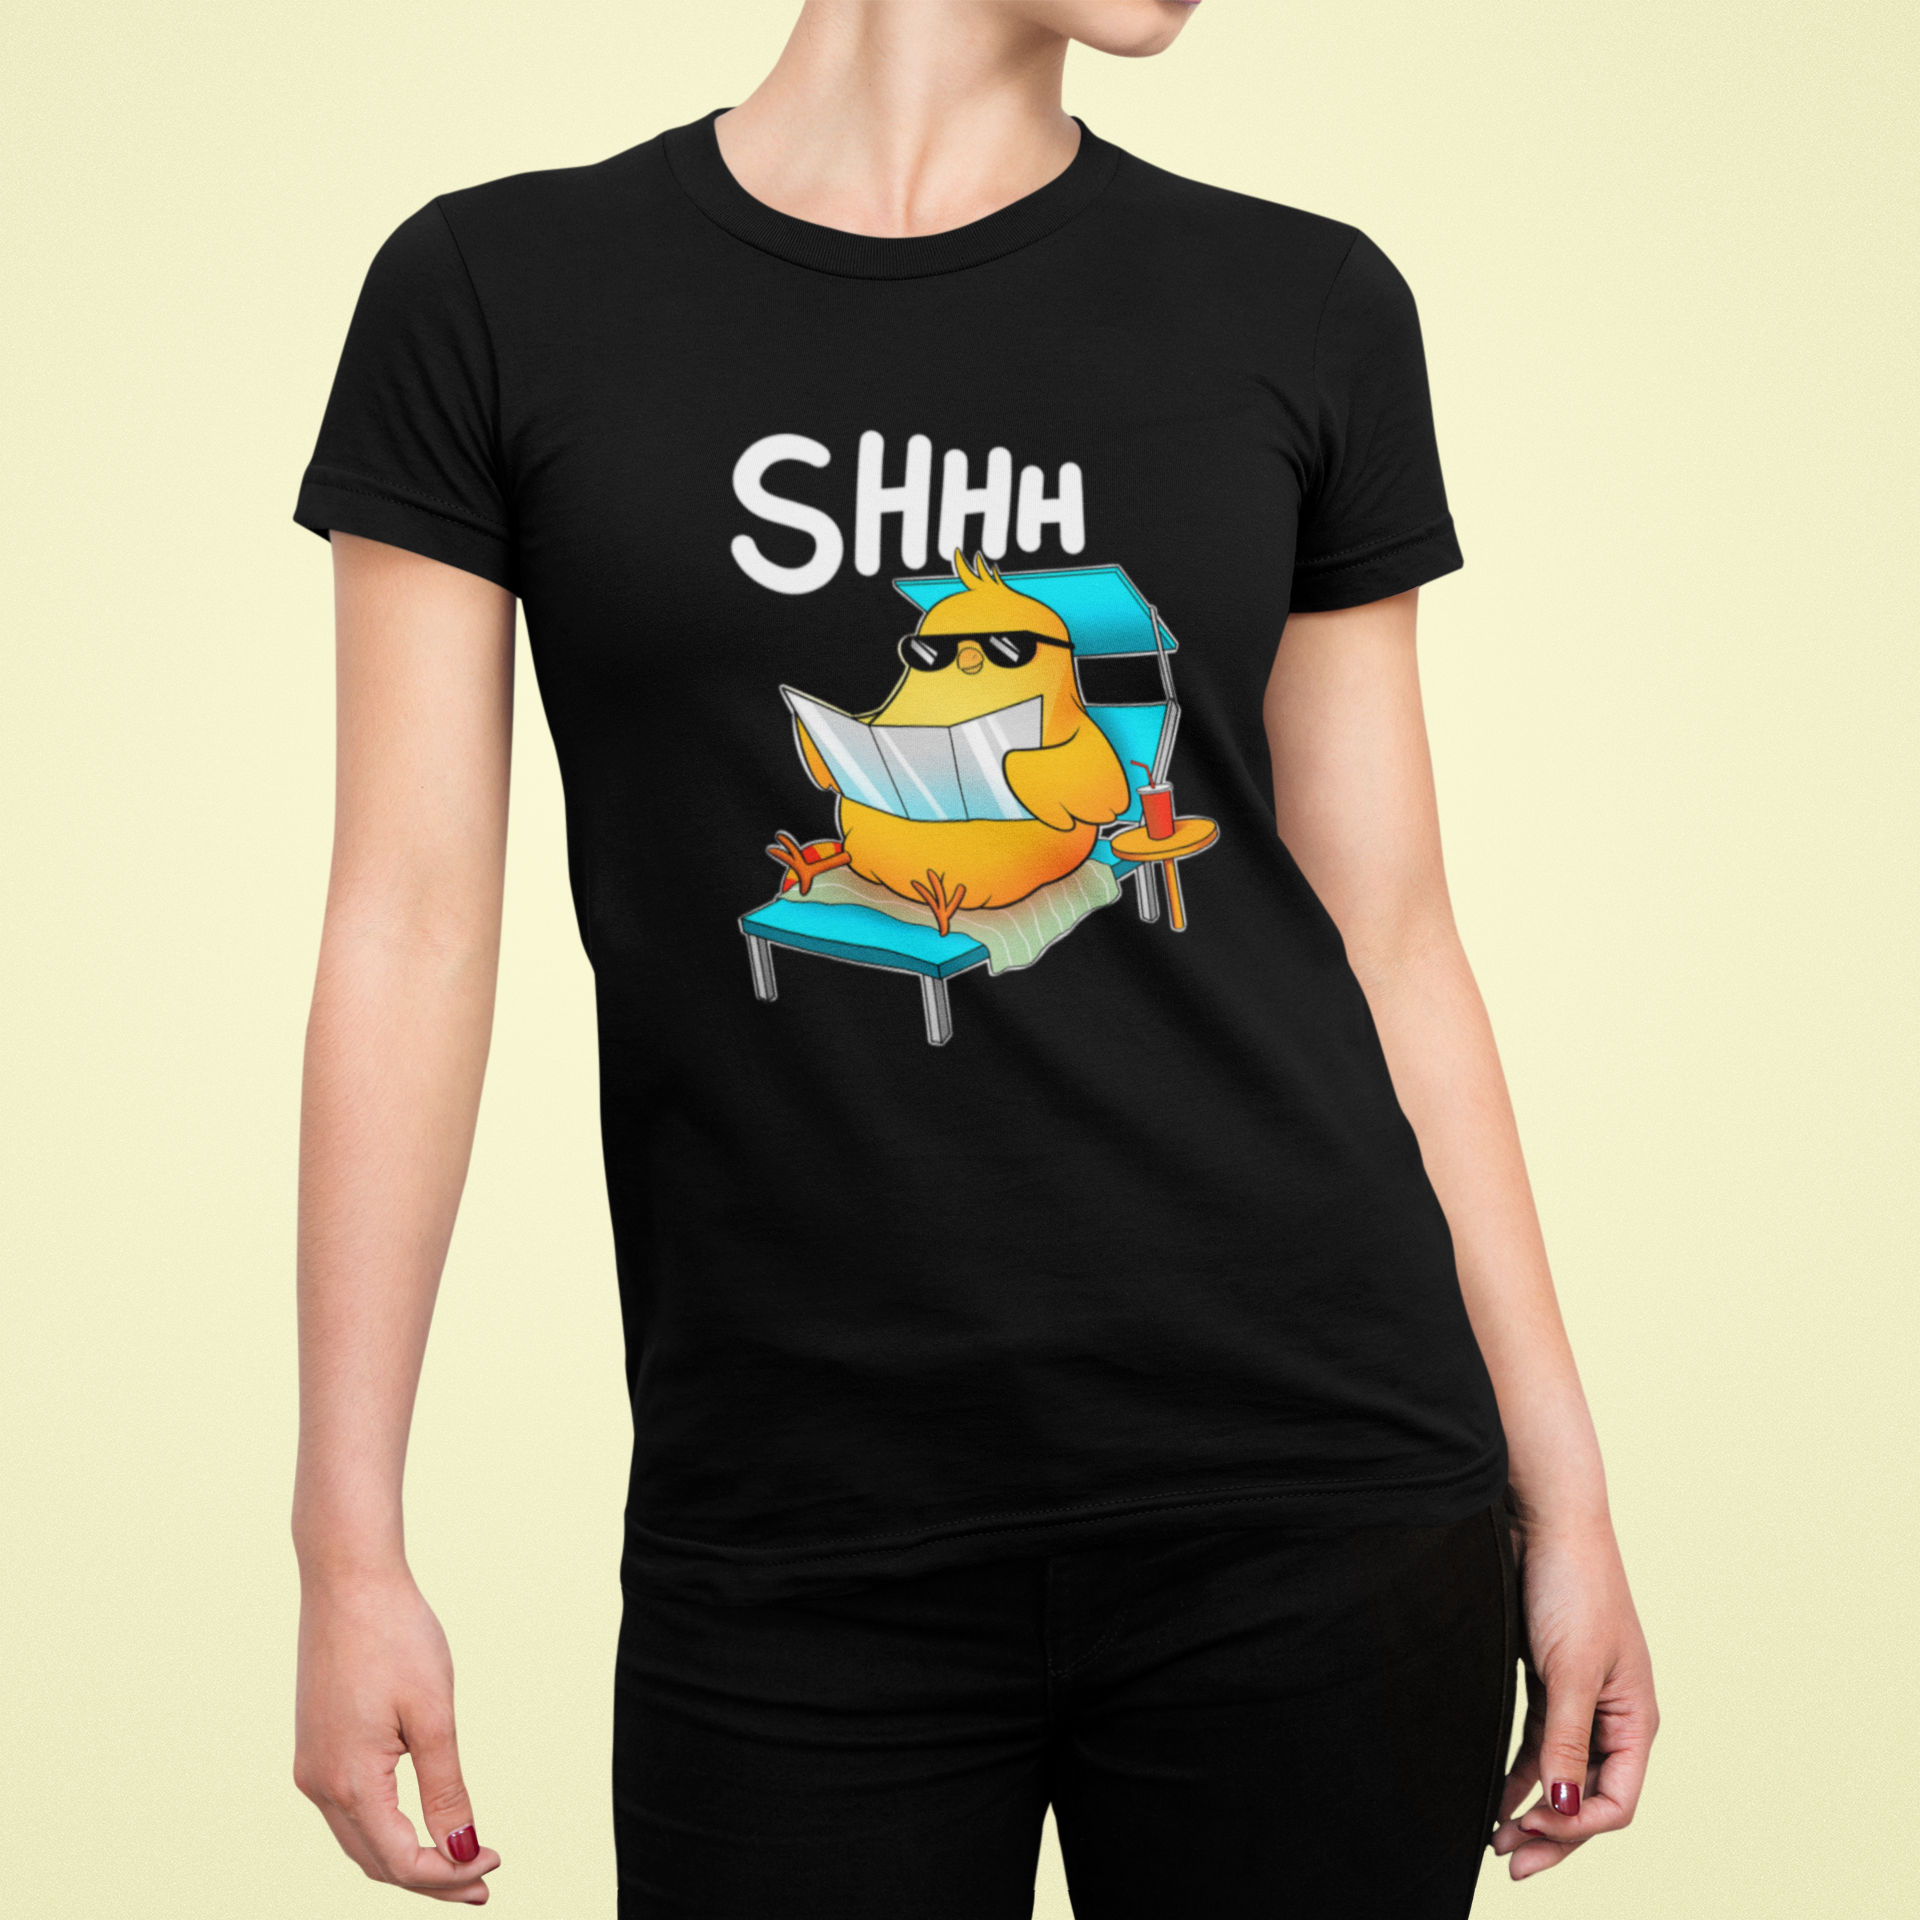 Women's T-Shirt (Cute Chick Print)